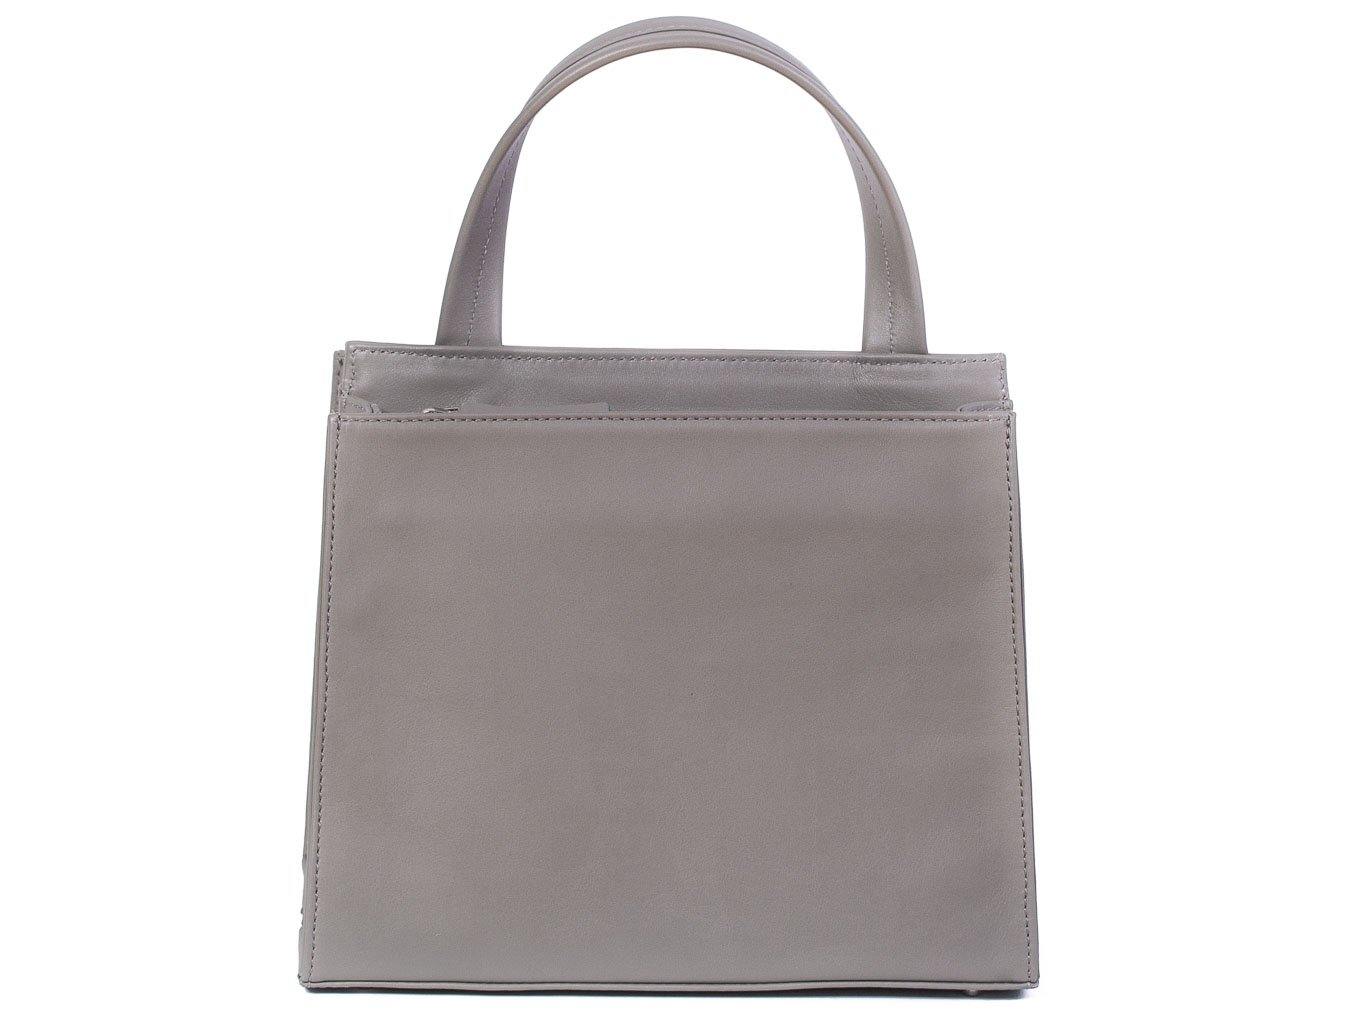 Top Handle Springbok Handbag in Slate Grey with a fan feature by Sherene Melinda back